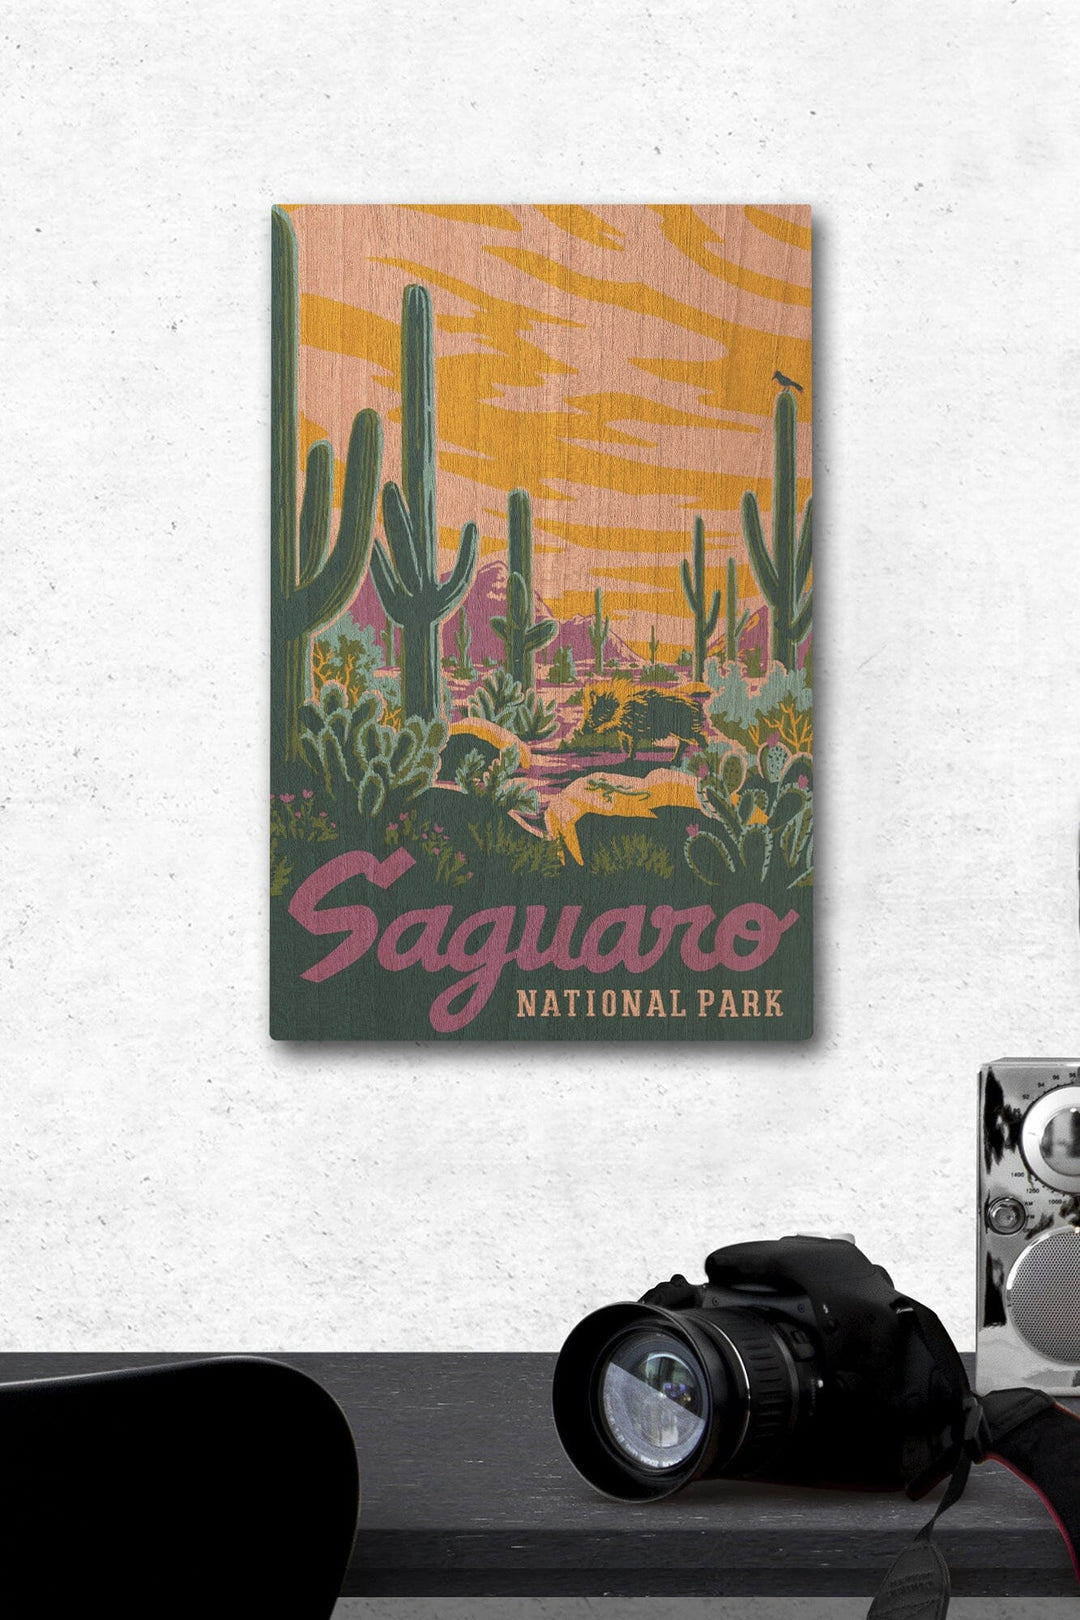 Saguaro National Park, Arizona, Explorer Series, Saguaro, Wood Signs and Postcards Wood Lantern Press 12 x 18 Wood Gallery Print 